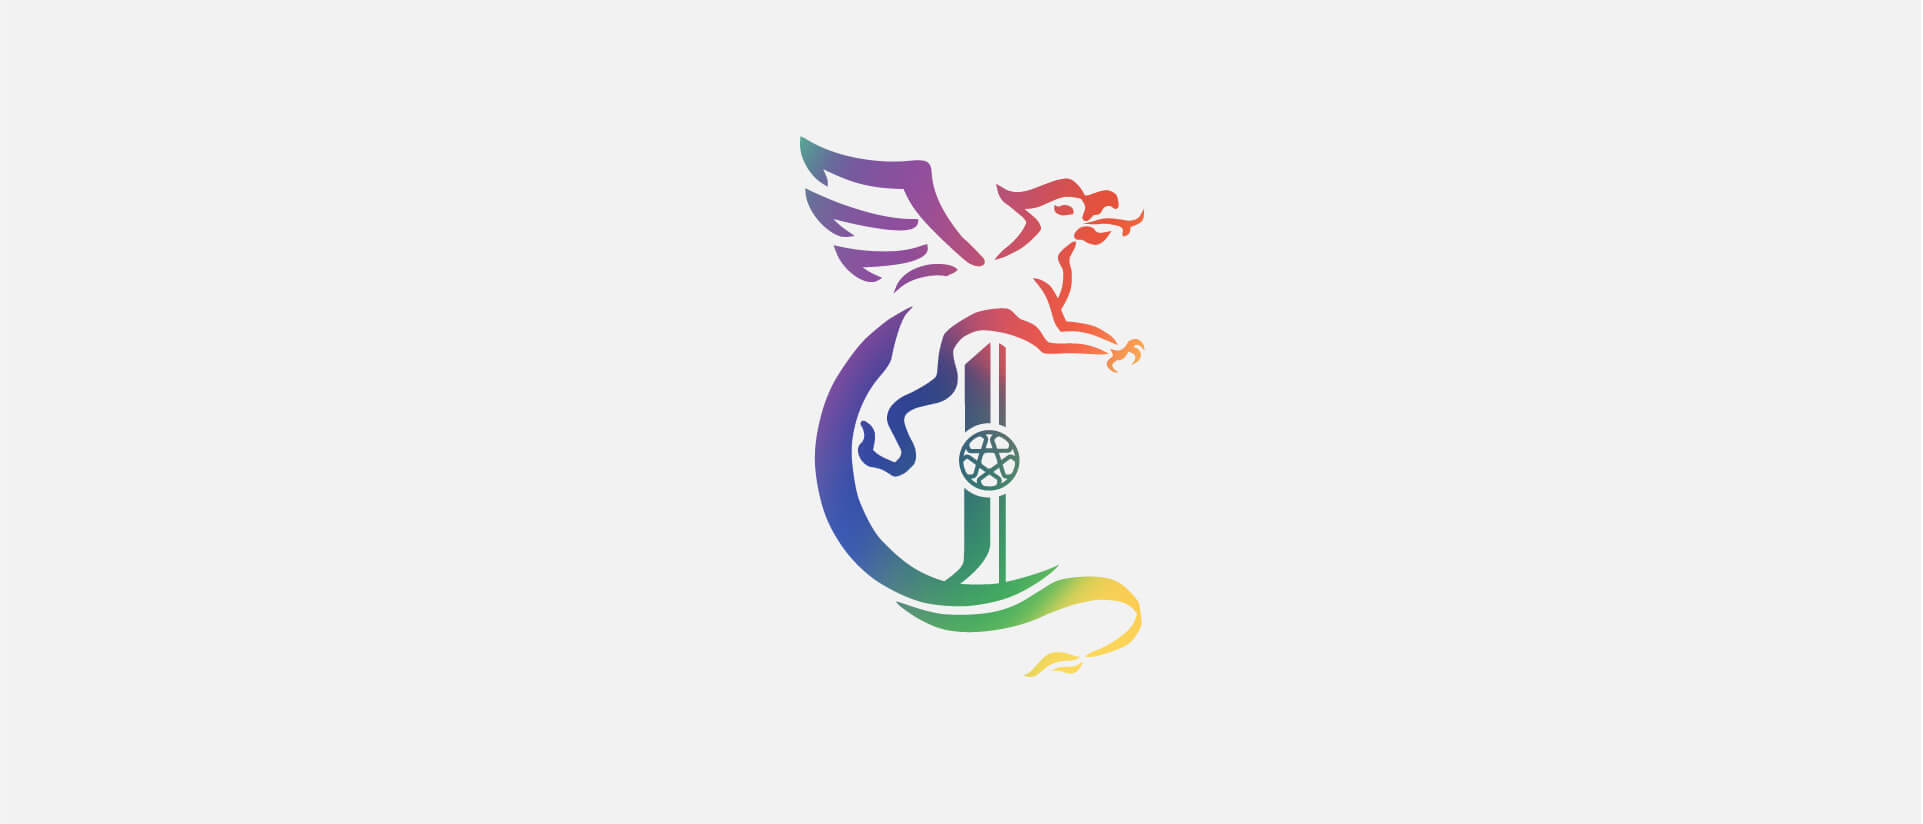 Chattahooligans tenth aniversary logo icon for Pride Month